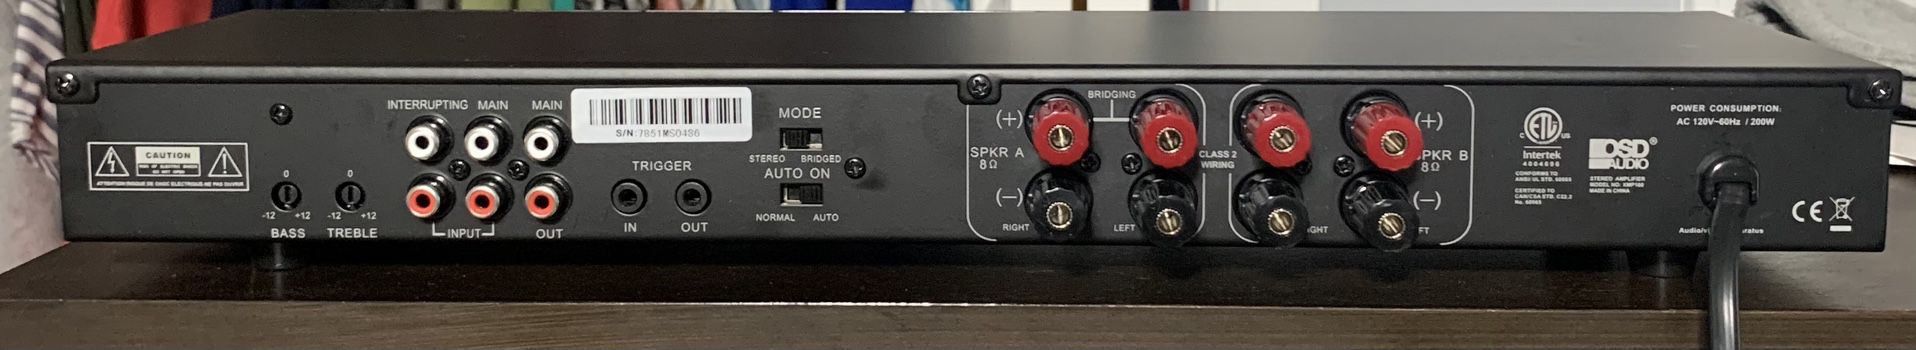 OSD 100W Stereo Amplifier, Dual Source Input, Bass & Treble Control, Auto-On, Class D XMP100